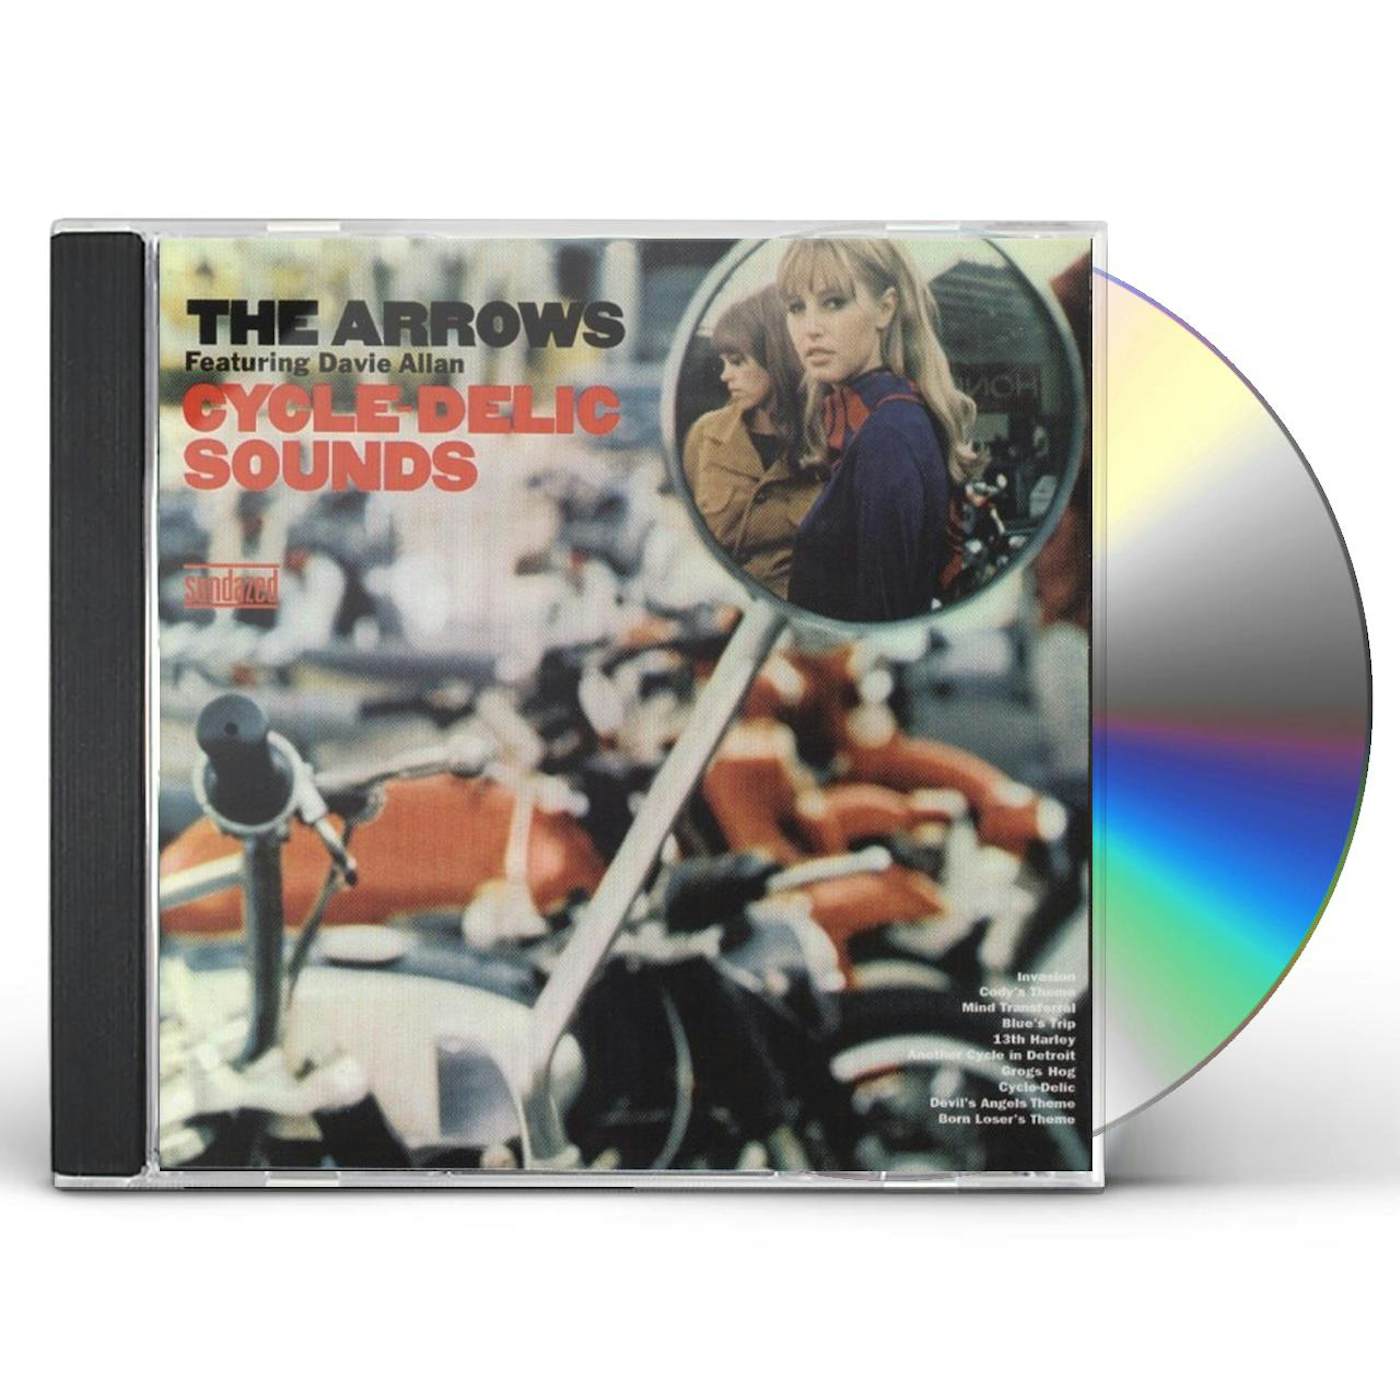 Davie Allan & The Arrows CYCLE DELIC SOUNDS OF CD